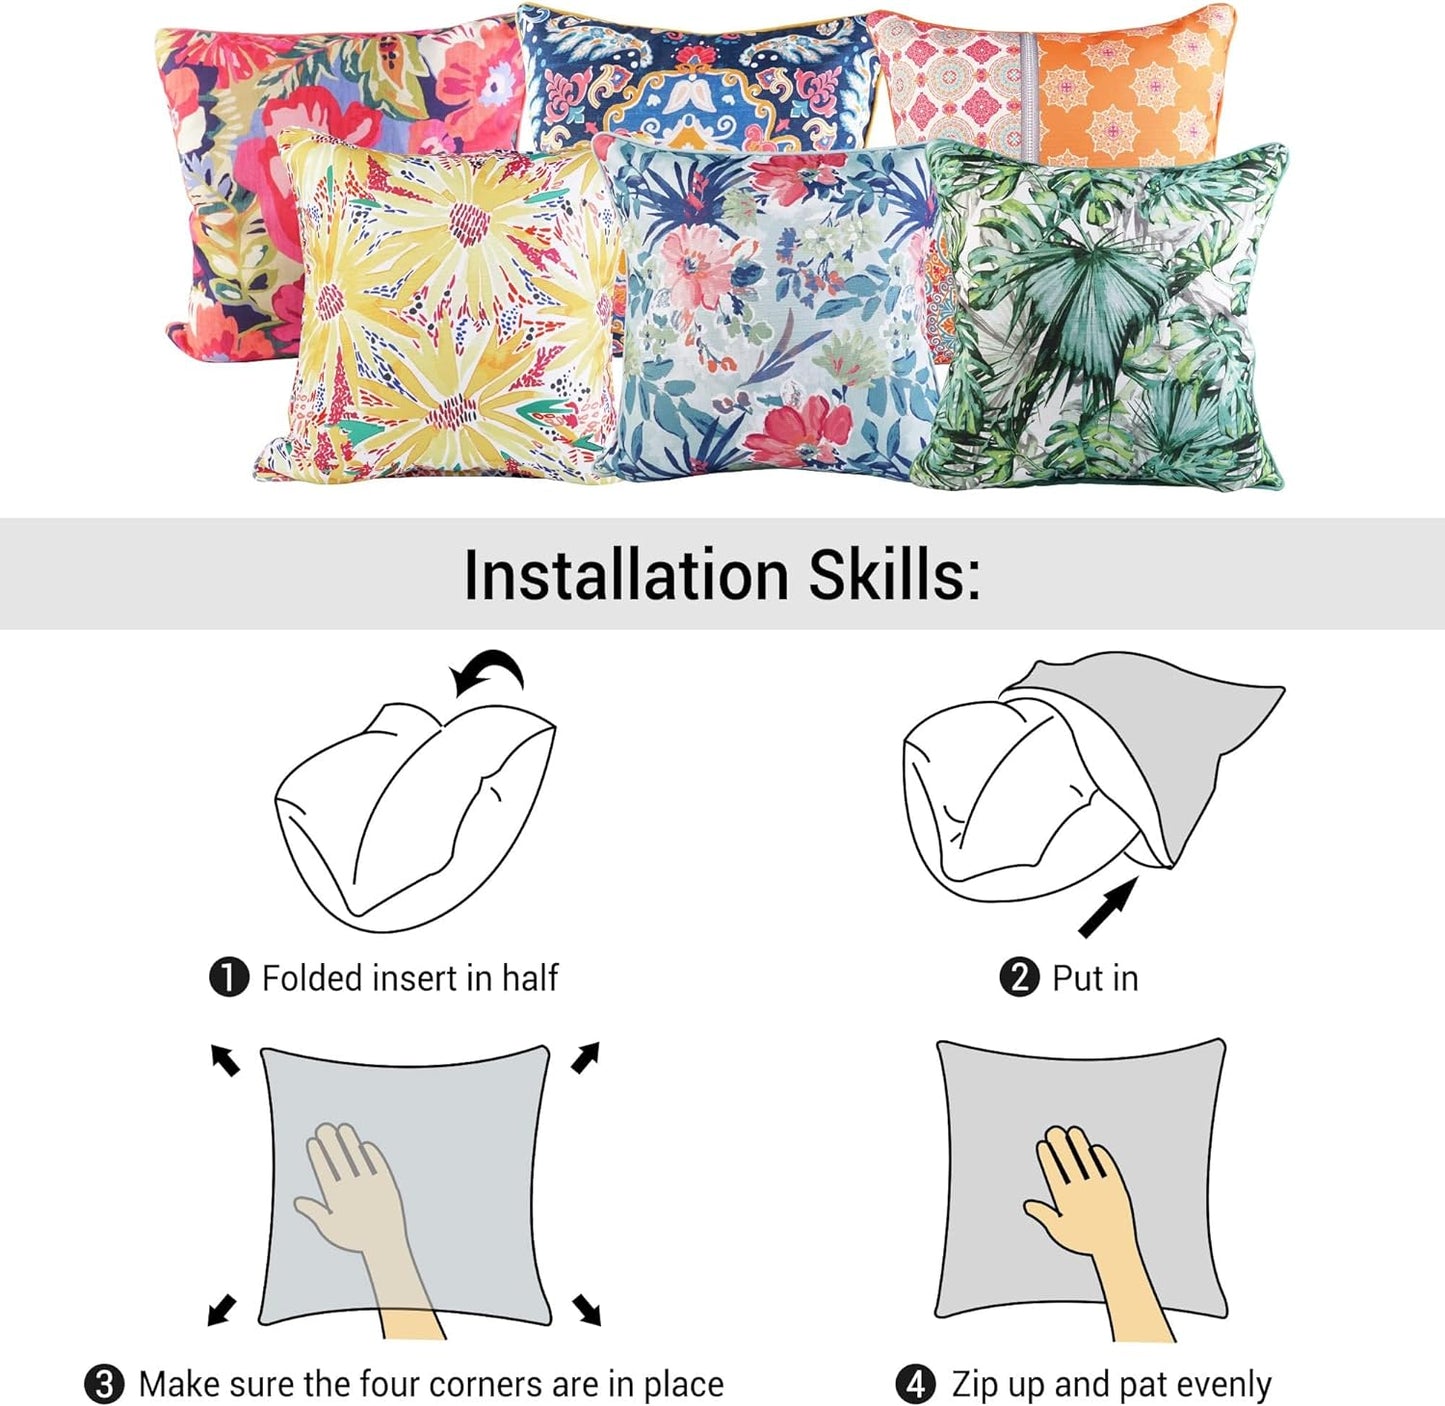 Softan 2 Pieces Outdoor & Indoor Throw Pillow Covers